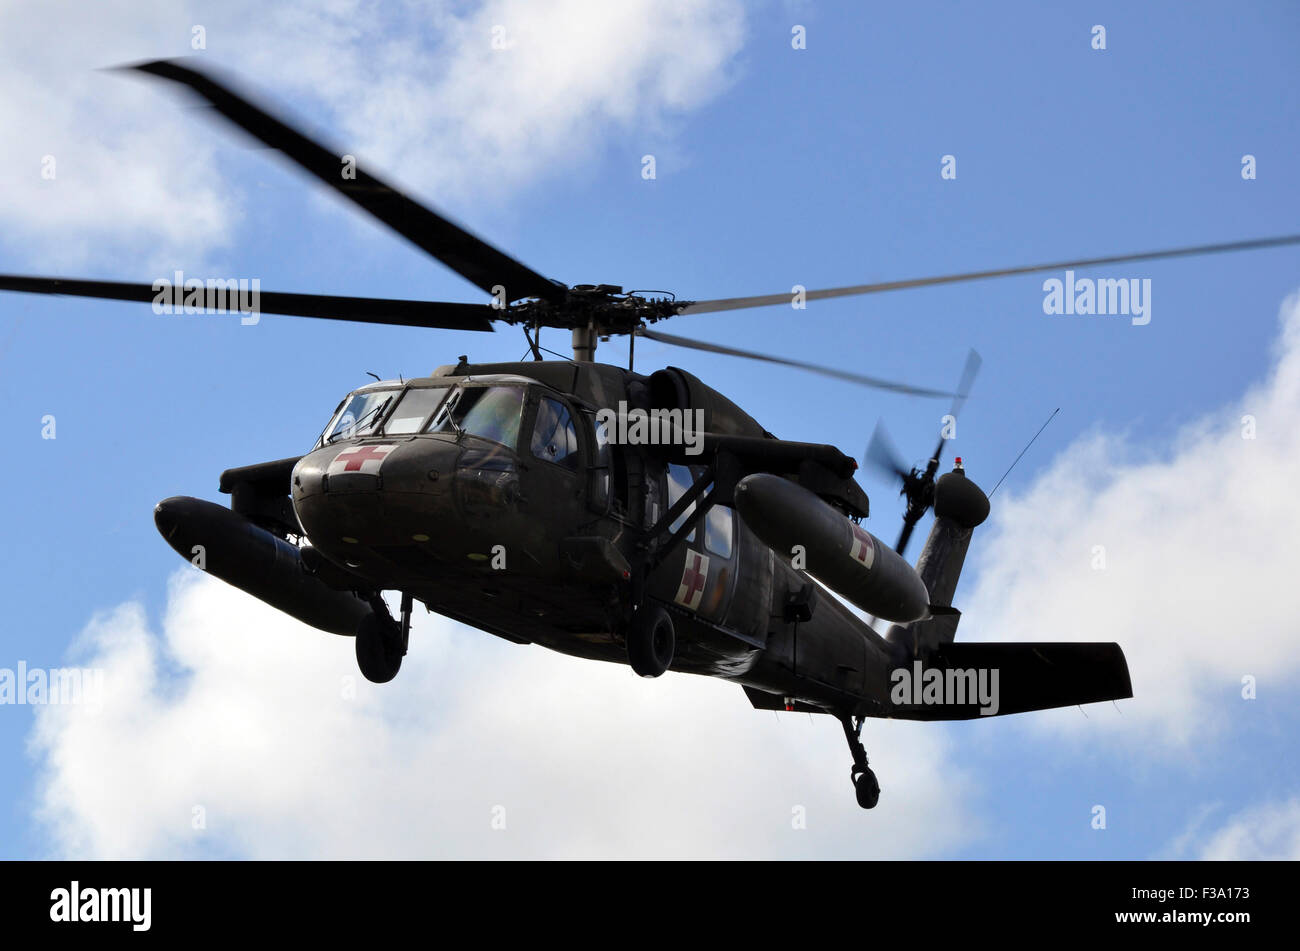 3 dicembre 2013 - UN UH-60 Black Hawk elicottero solleva dal Mocoron, Honduras, per condurre una evacuazione medica (MEDEVAC). Foto Stock